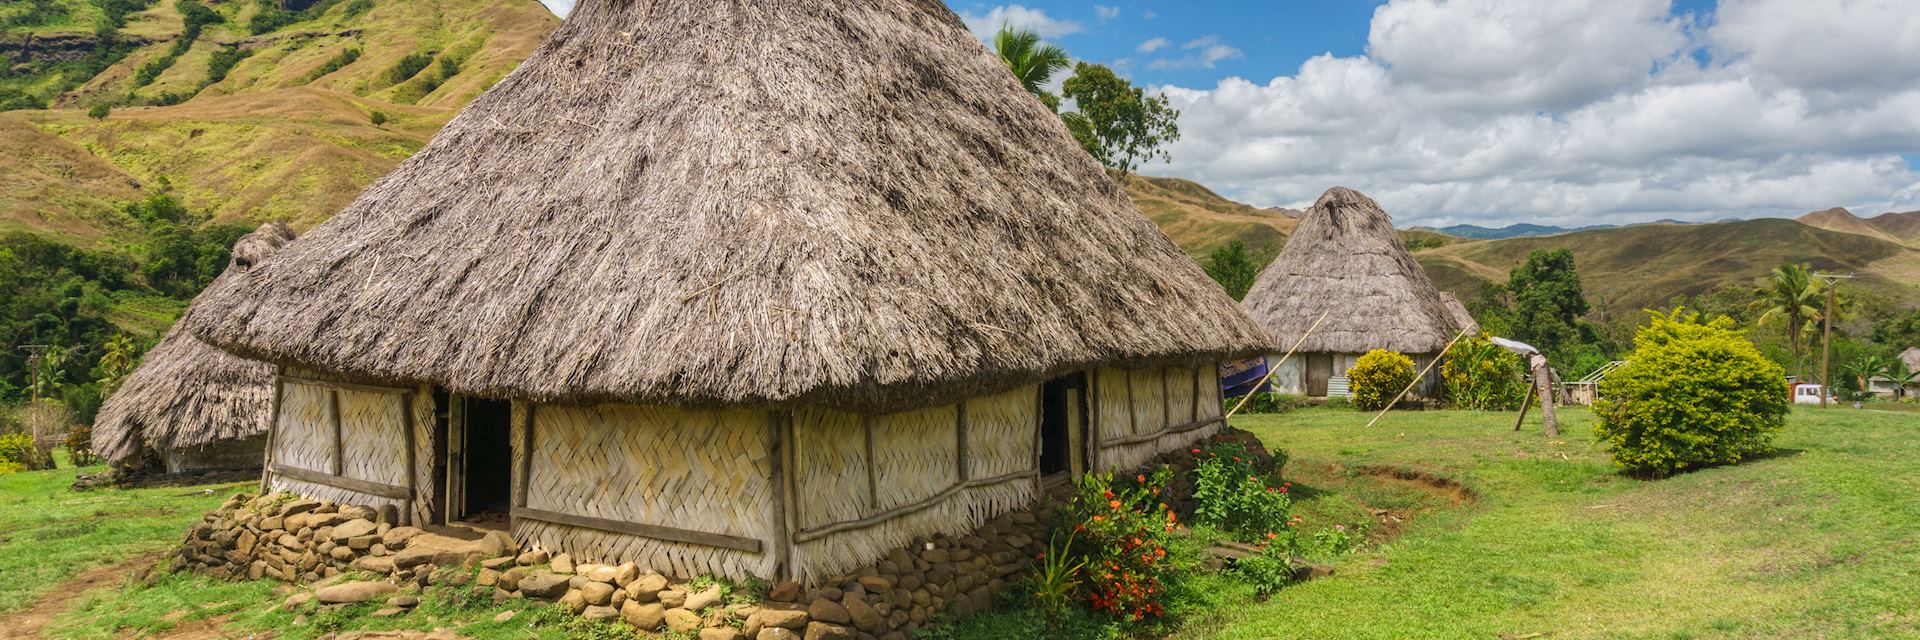 Traditional Fijian highland village